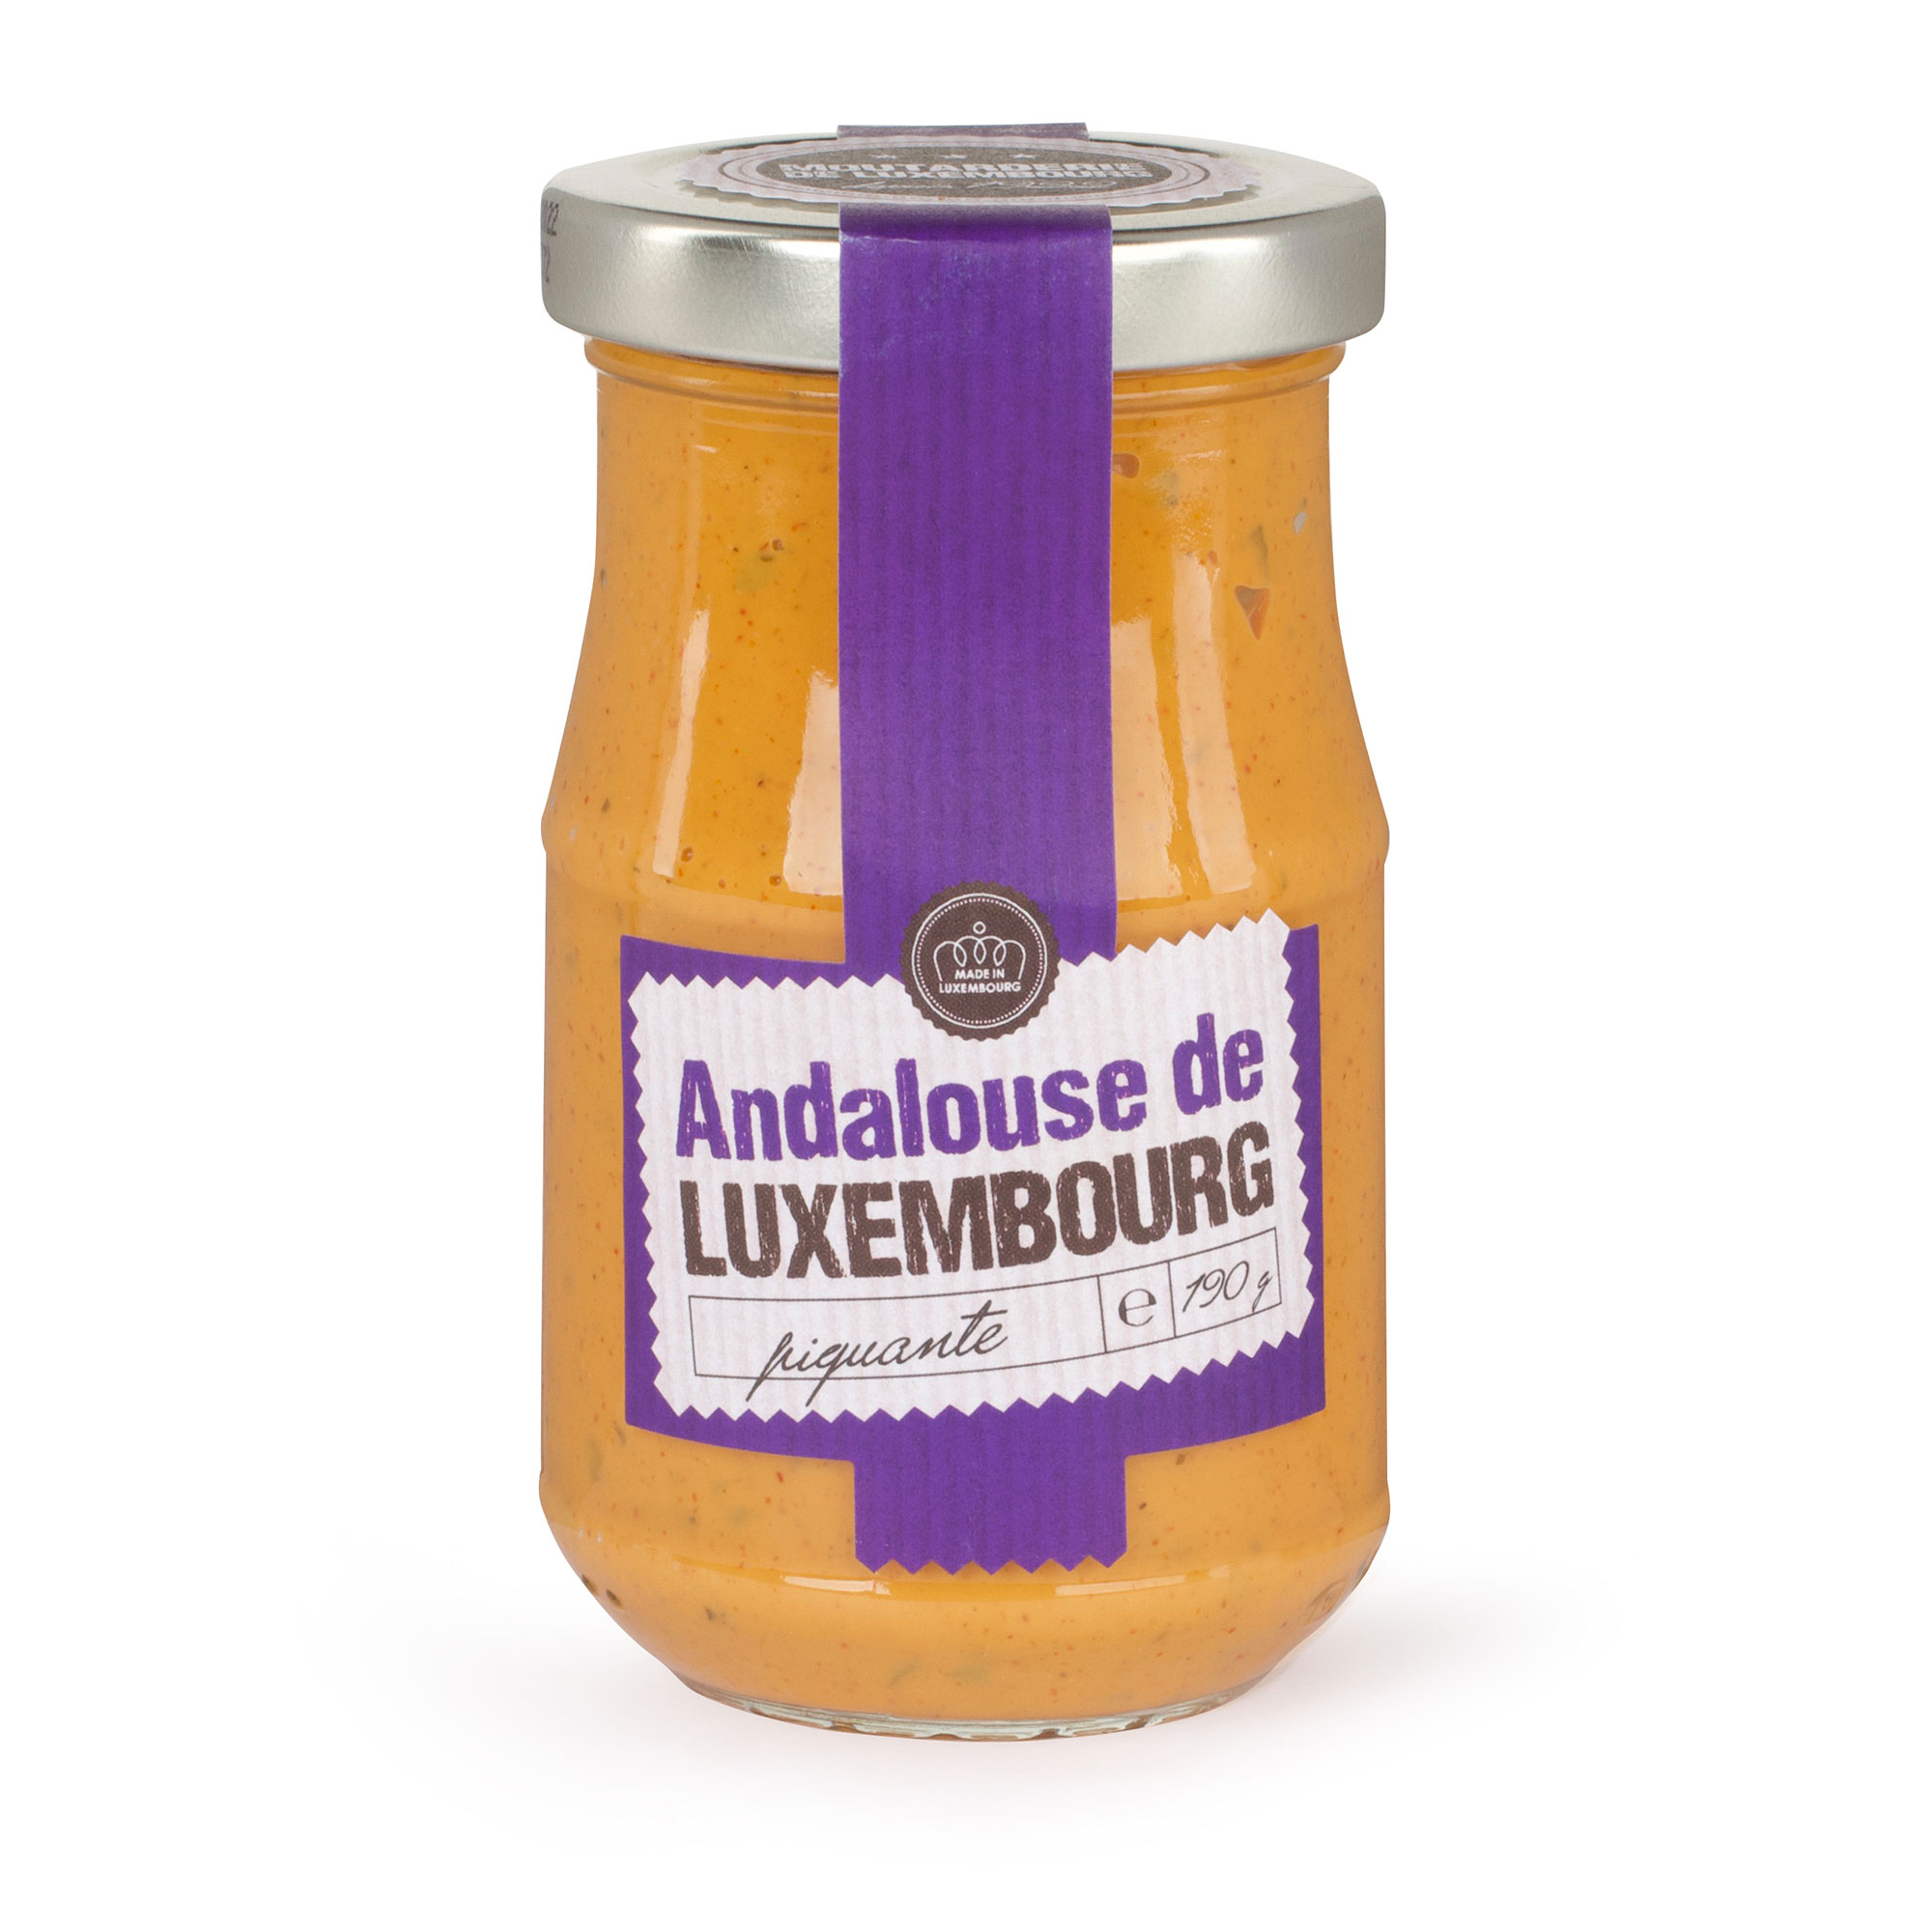 Andalouse de Luxembourg